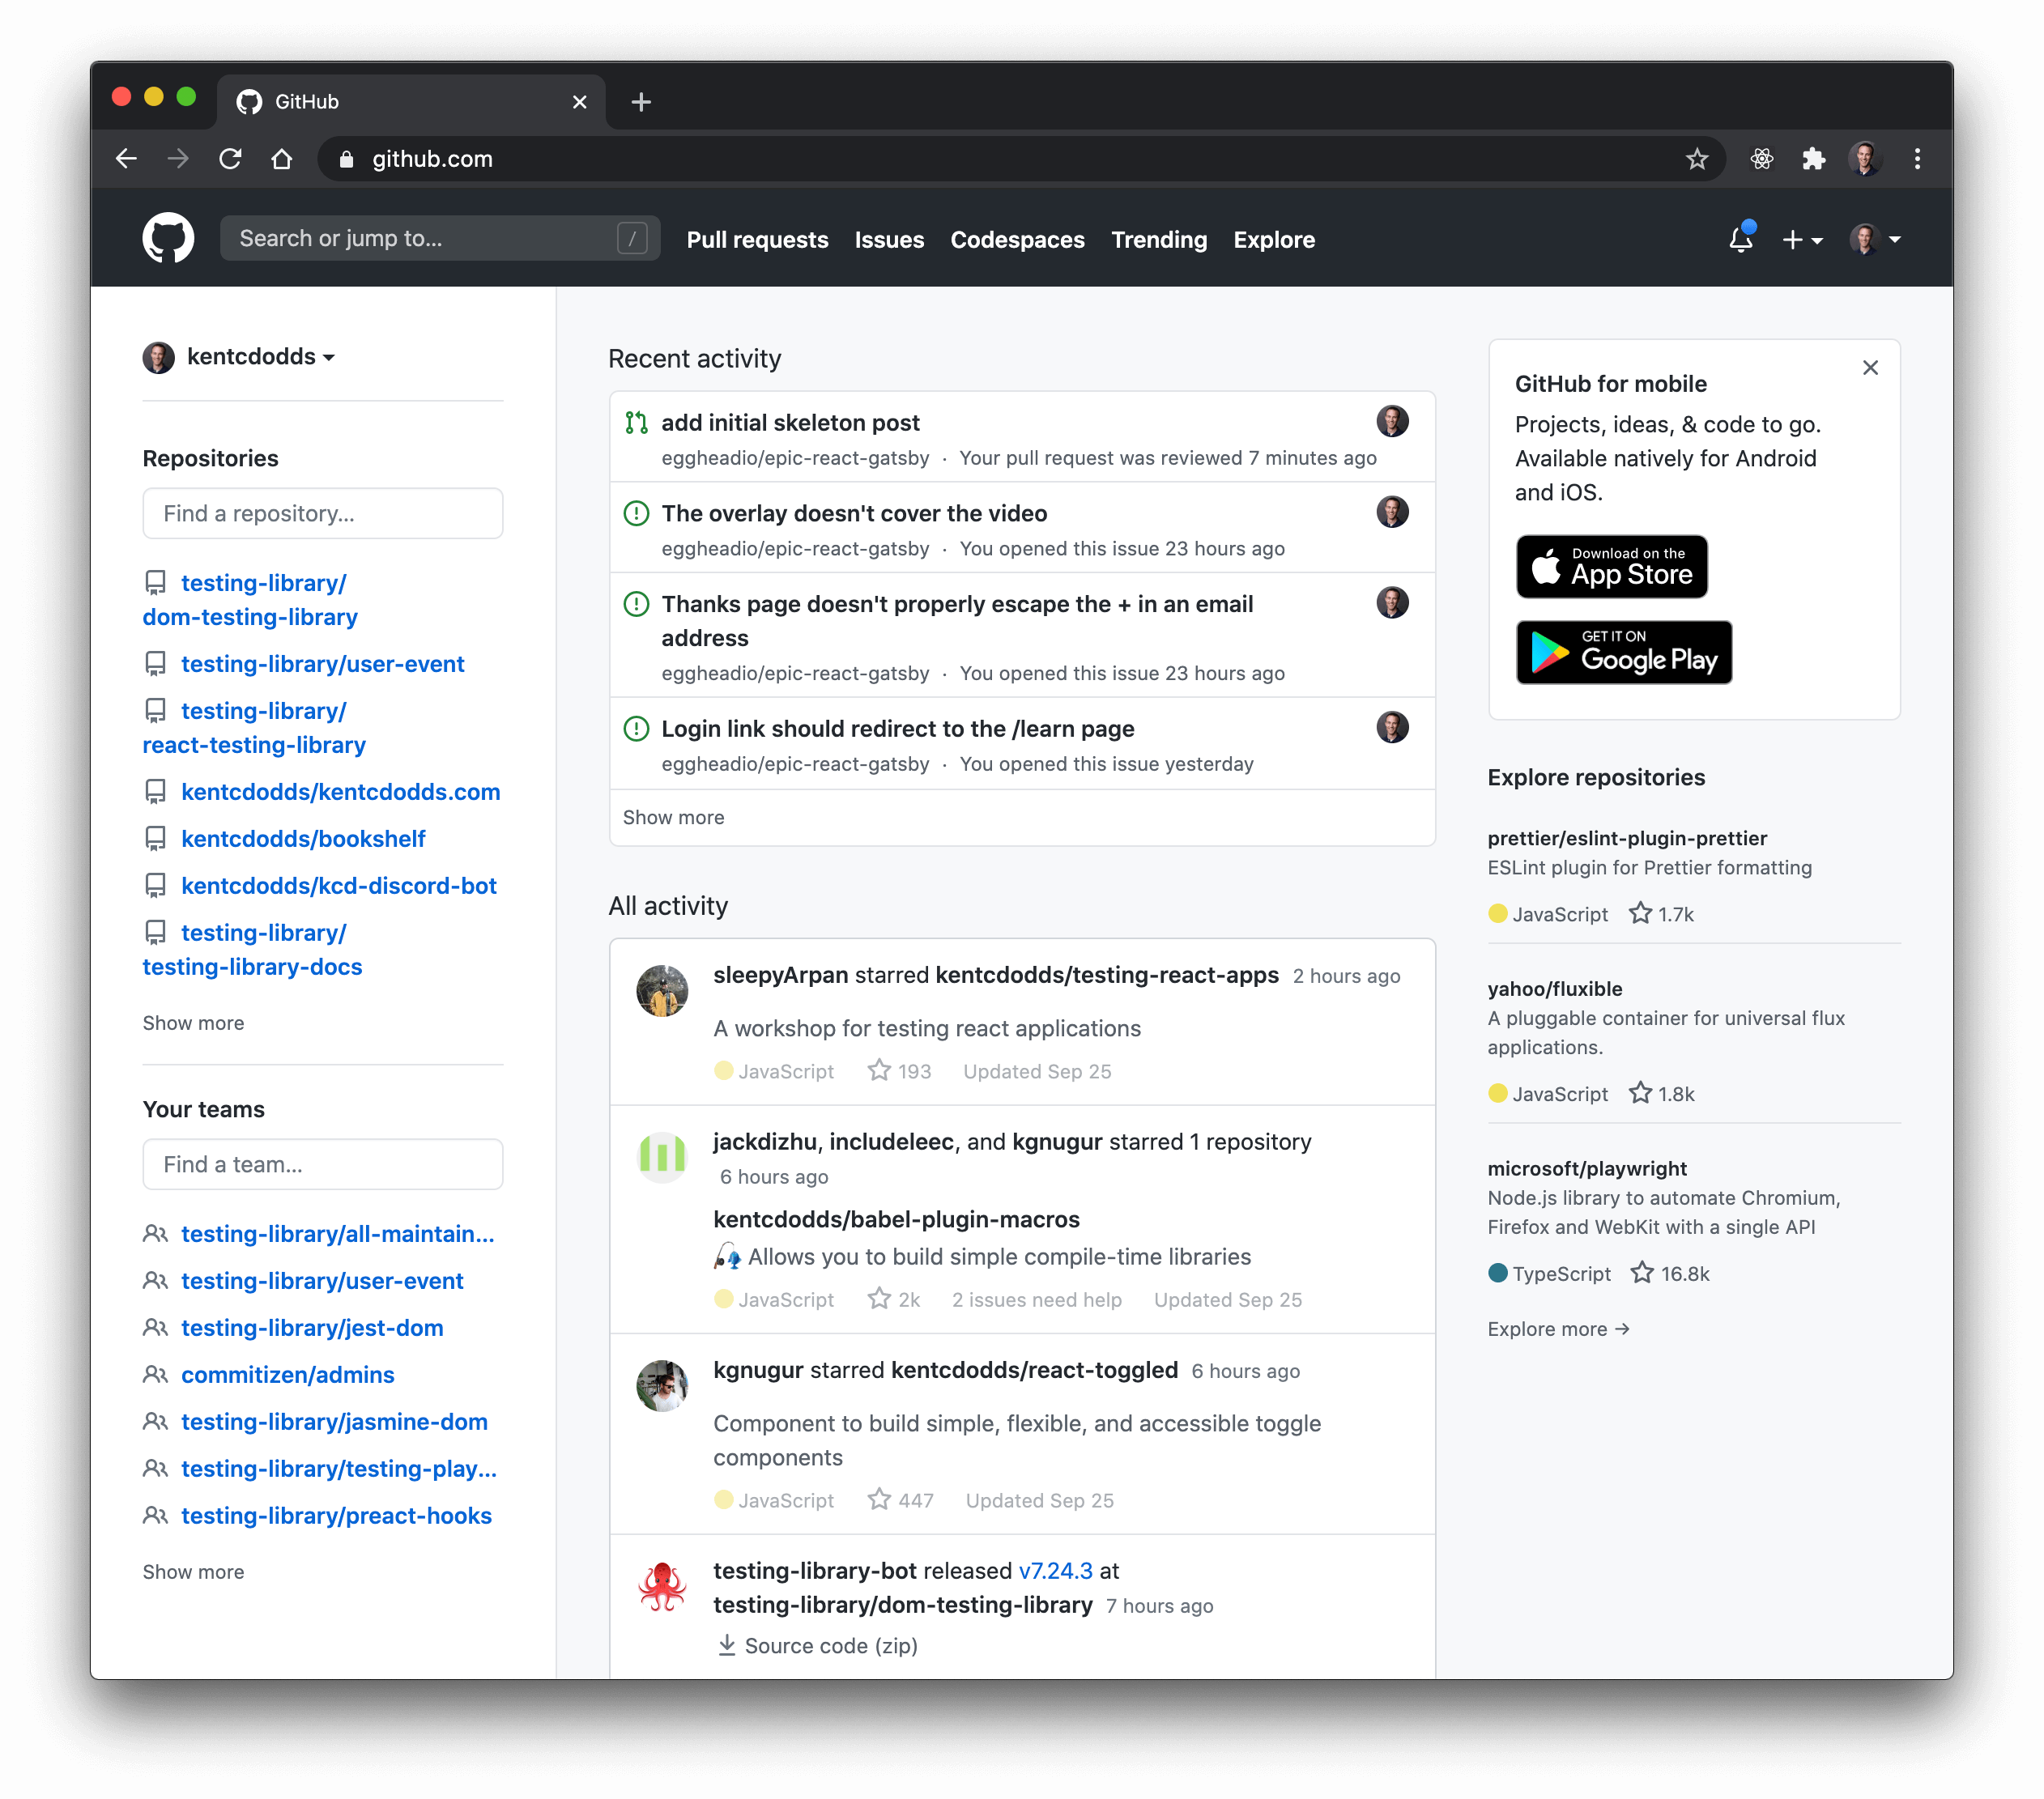 GitHub homepage UI